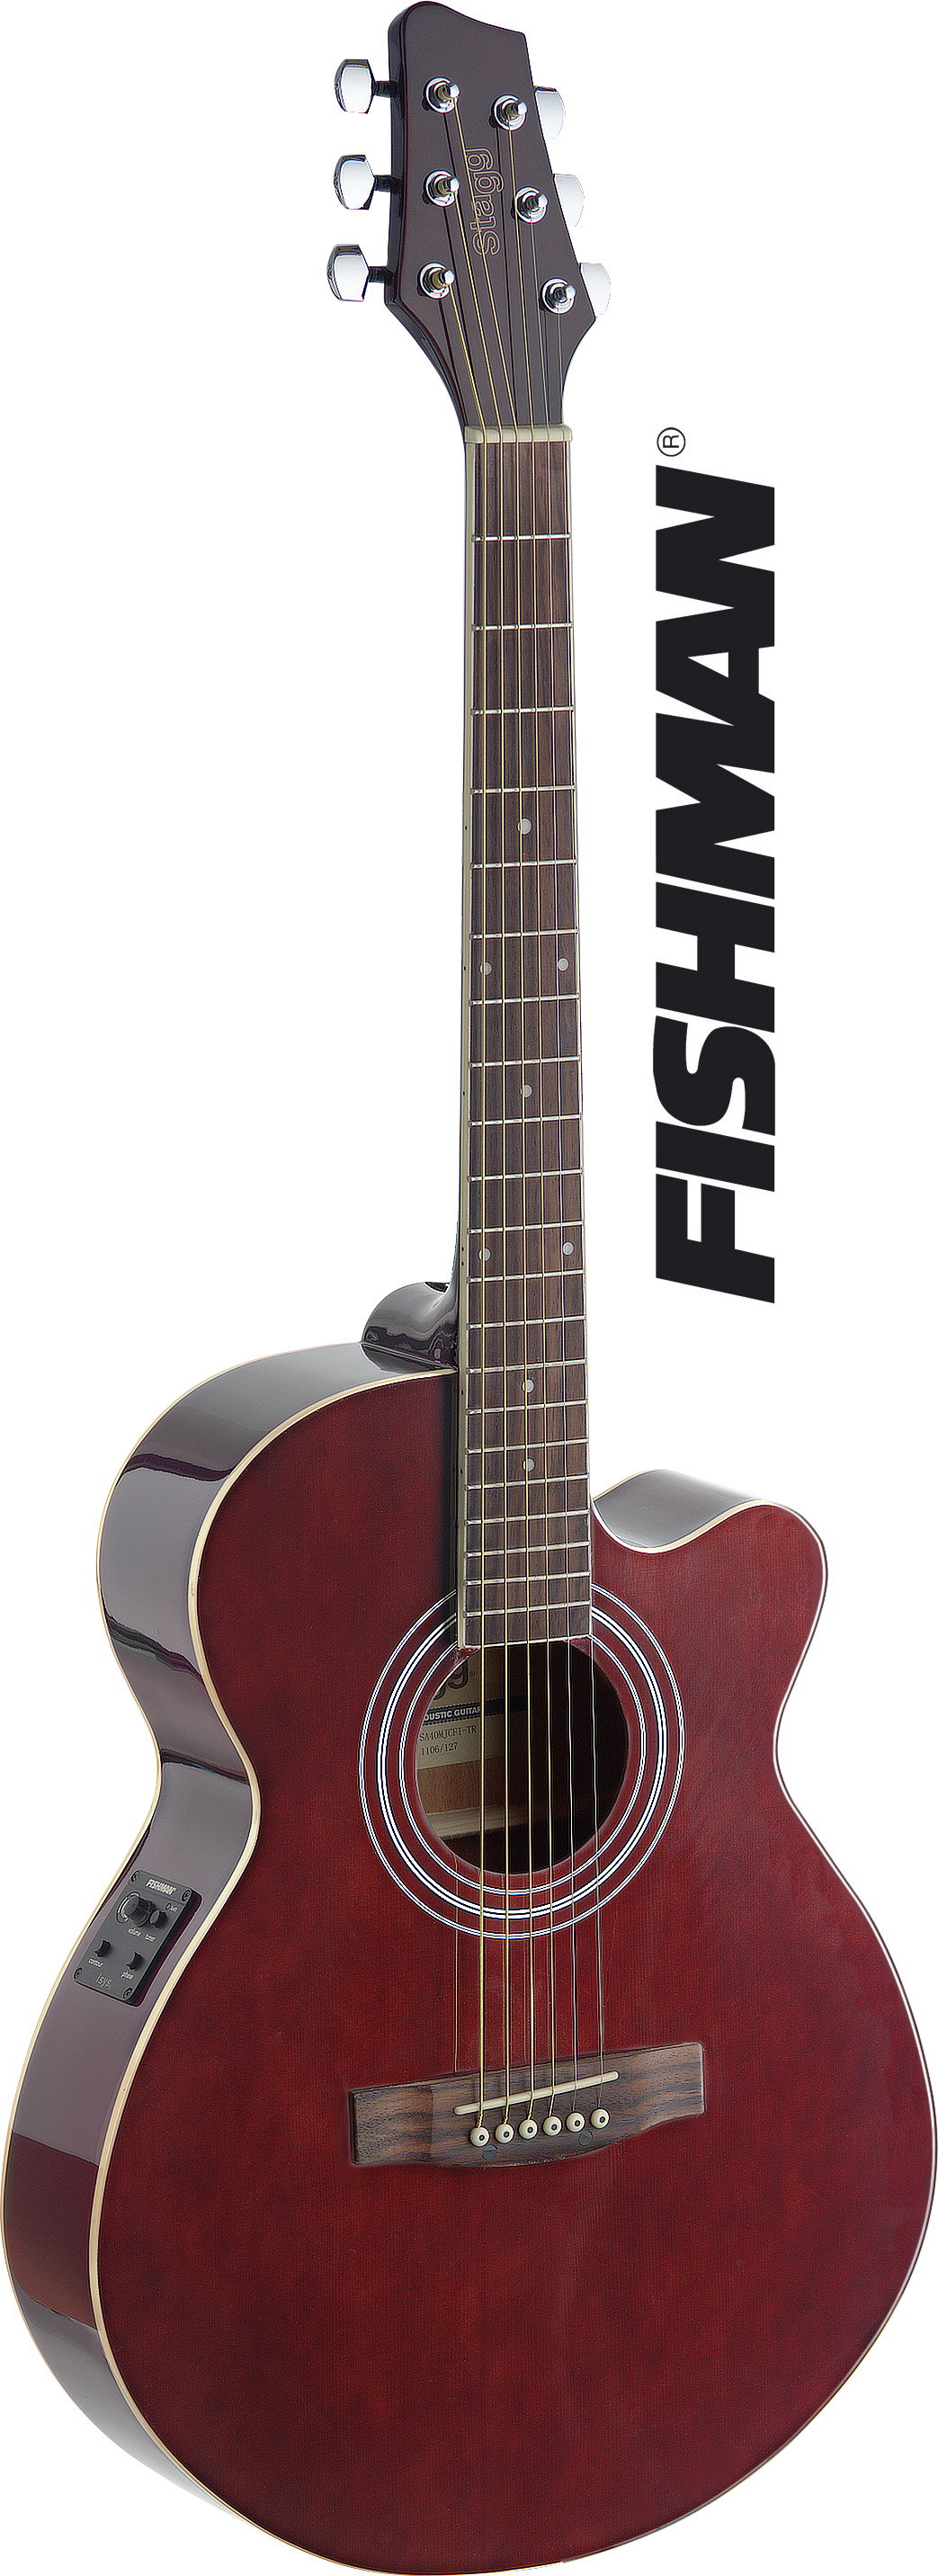 Elektroakustická kytara  Mini Jumbo s výkrojem a elektronikou FISHMAN, TR